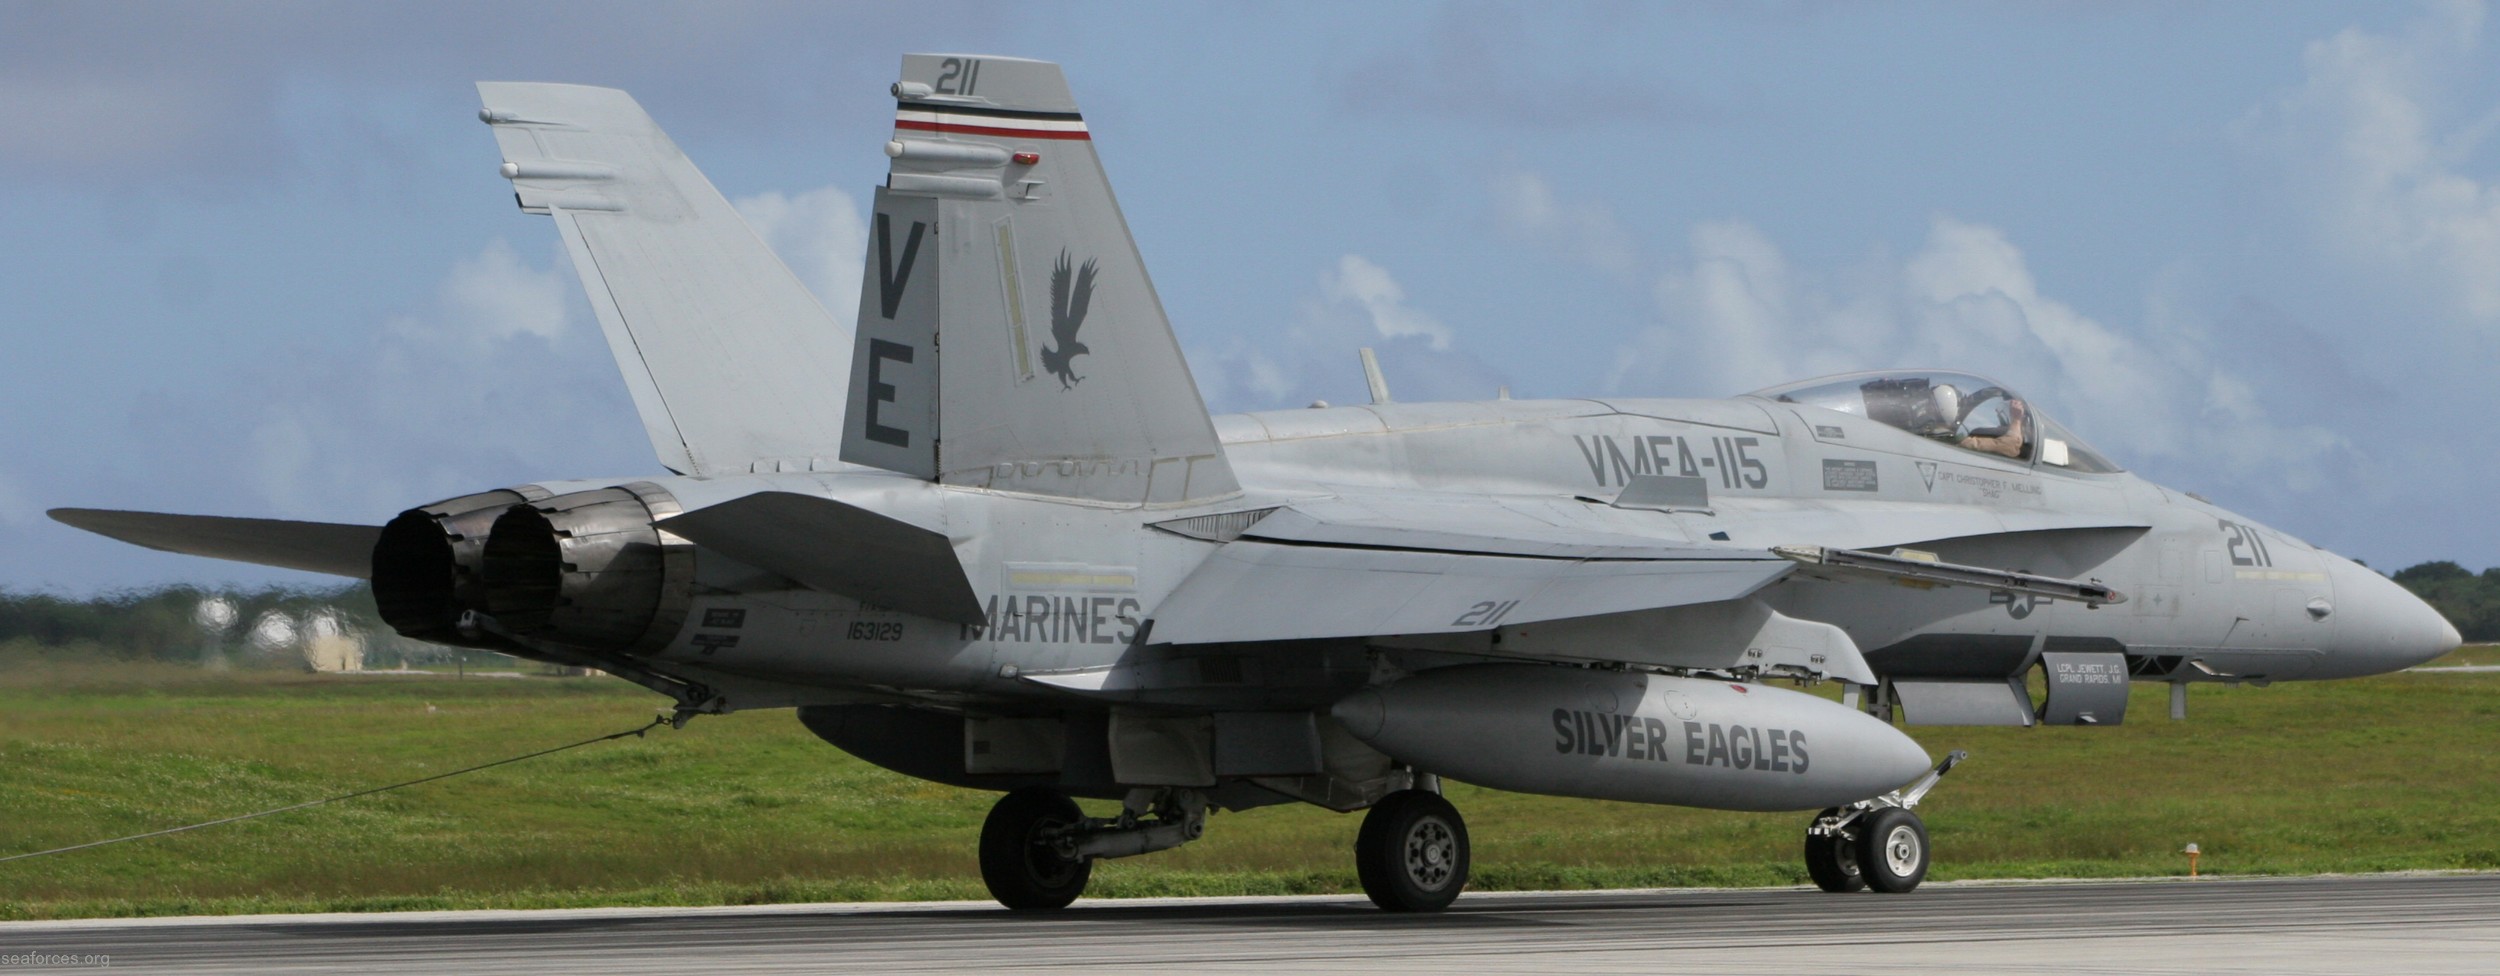 vmfa-115 silver eagles marine fighter attack squadron f/a-18a+ hornet 172 andersen afb guam